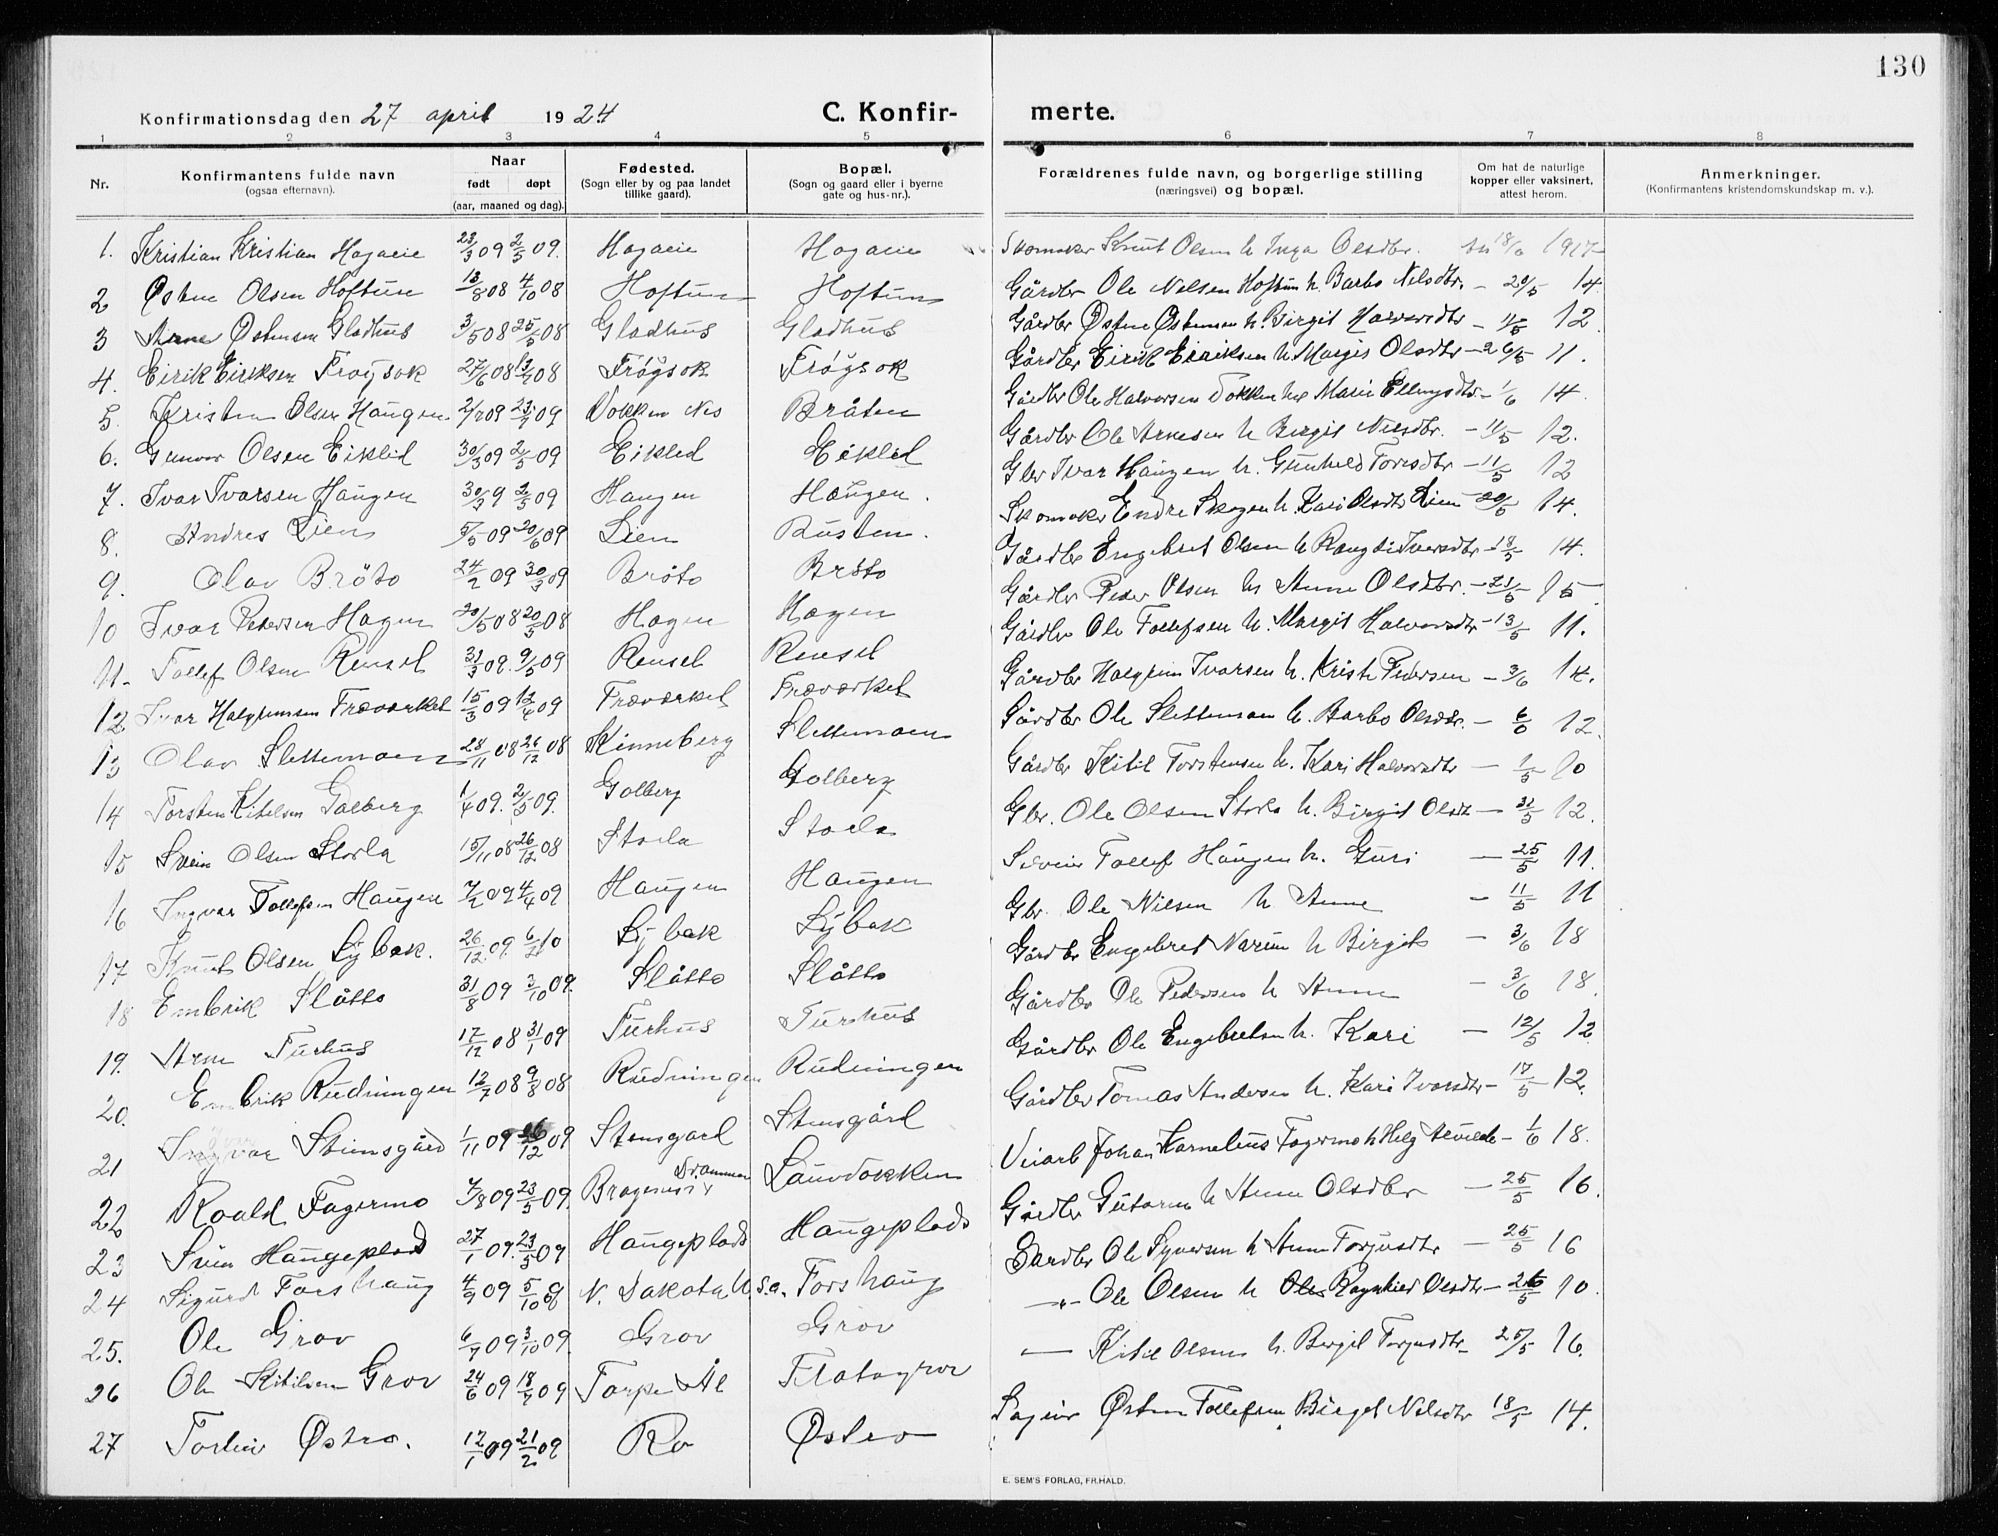 Parish Registry Sako Gol Kirkeboker G Ga L0004 Parish Register Copy No I 4 1915 1943 P 130 Scanned Archives The National Archives Of Norway